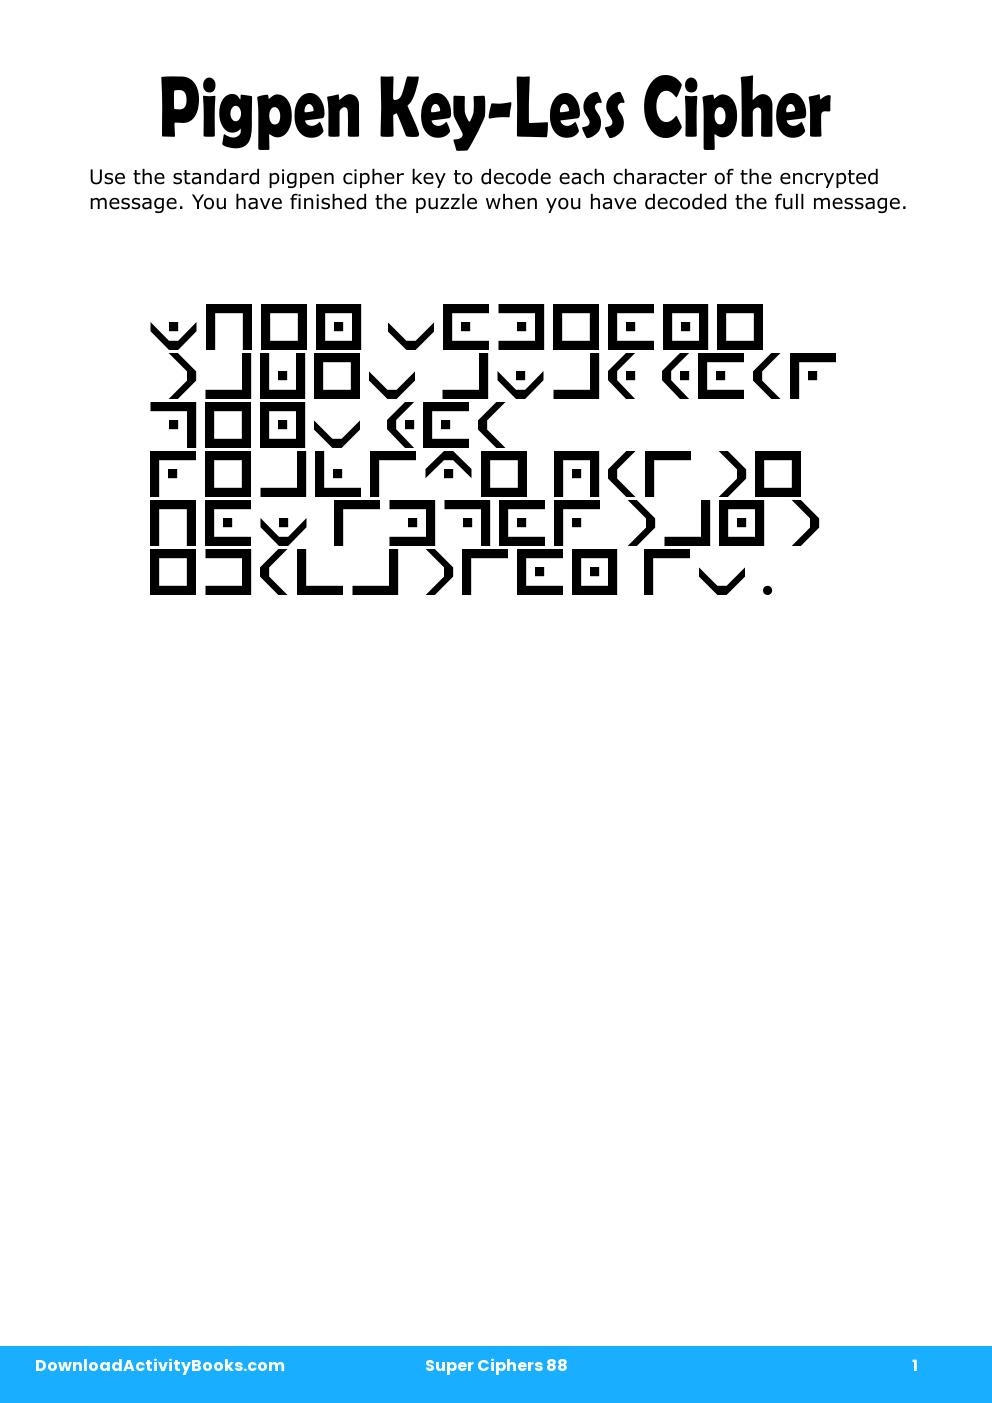 Pigpen Cipher in Super Ciphers 88